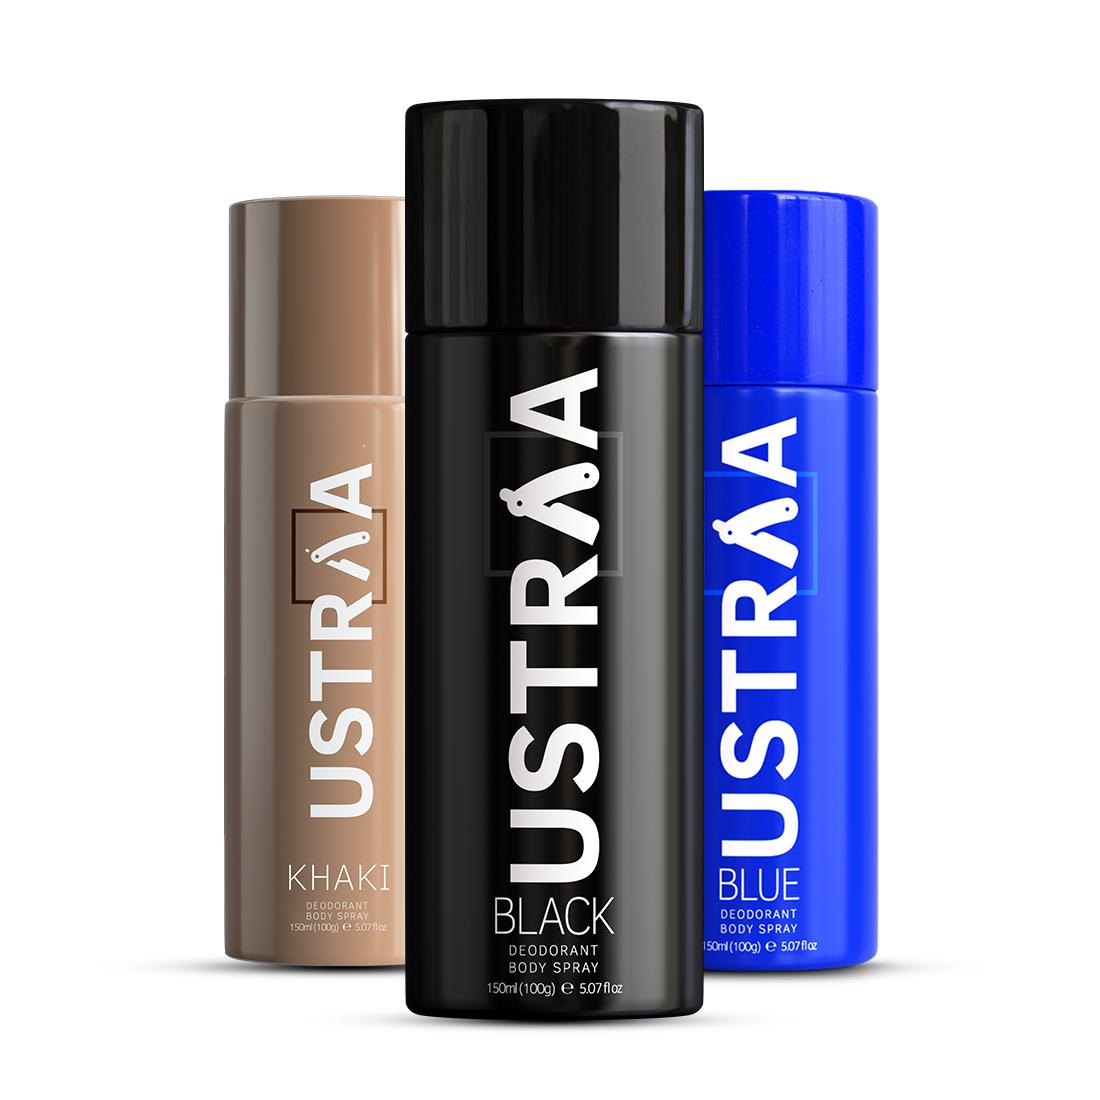 Ustraa Deodorant Body Spray - 150 ml - Blue,Khaki & Black - Set of 3